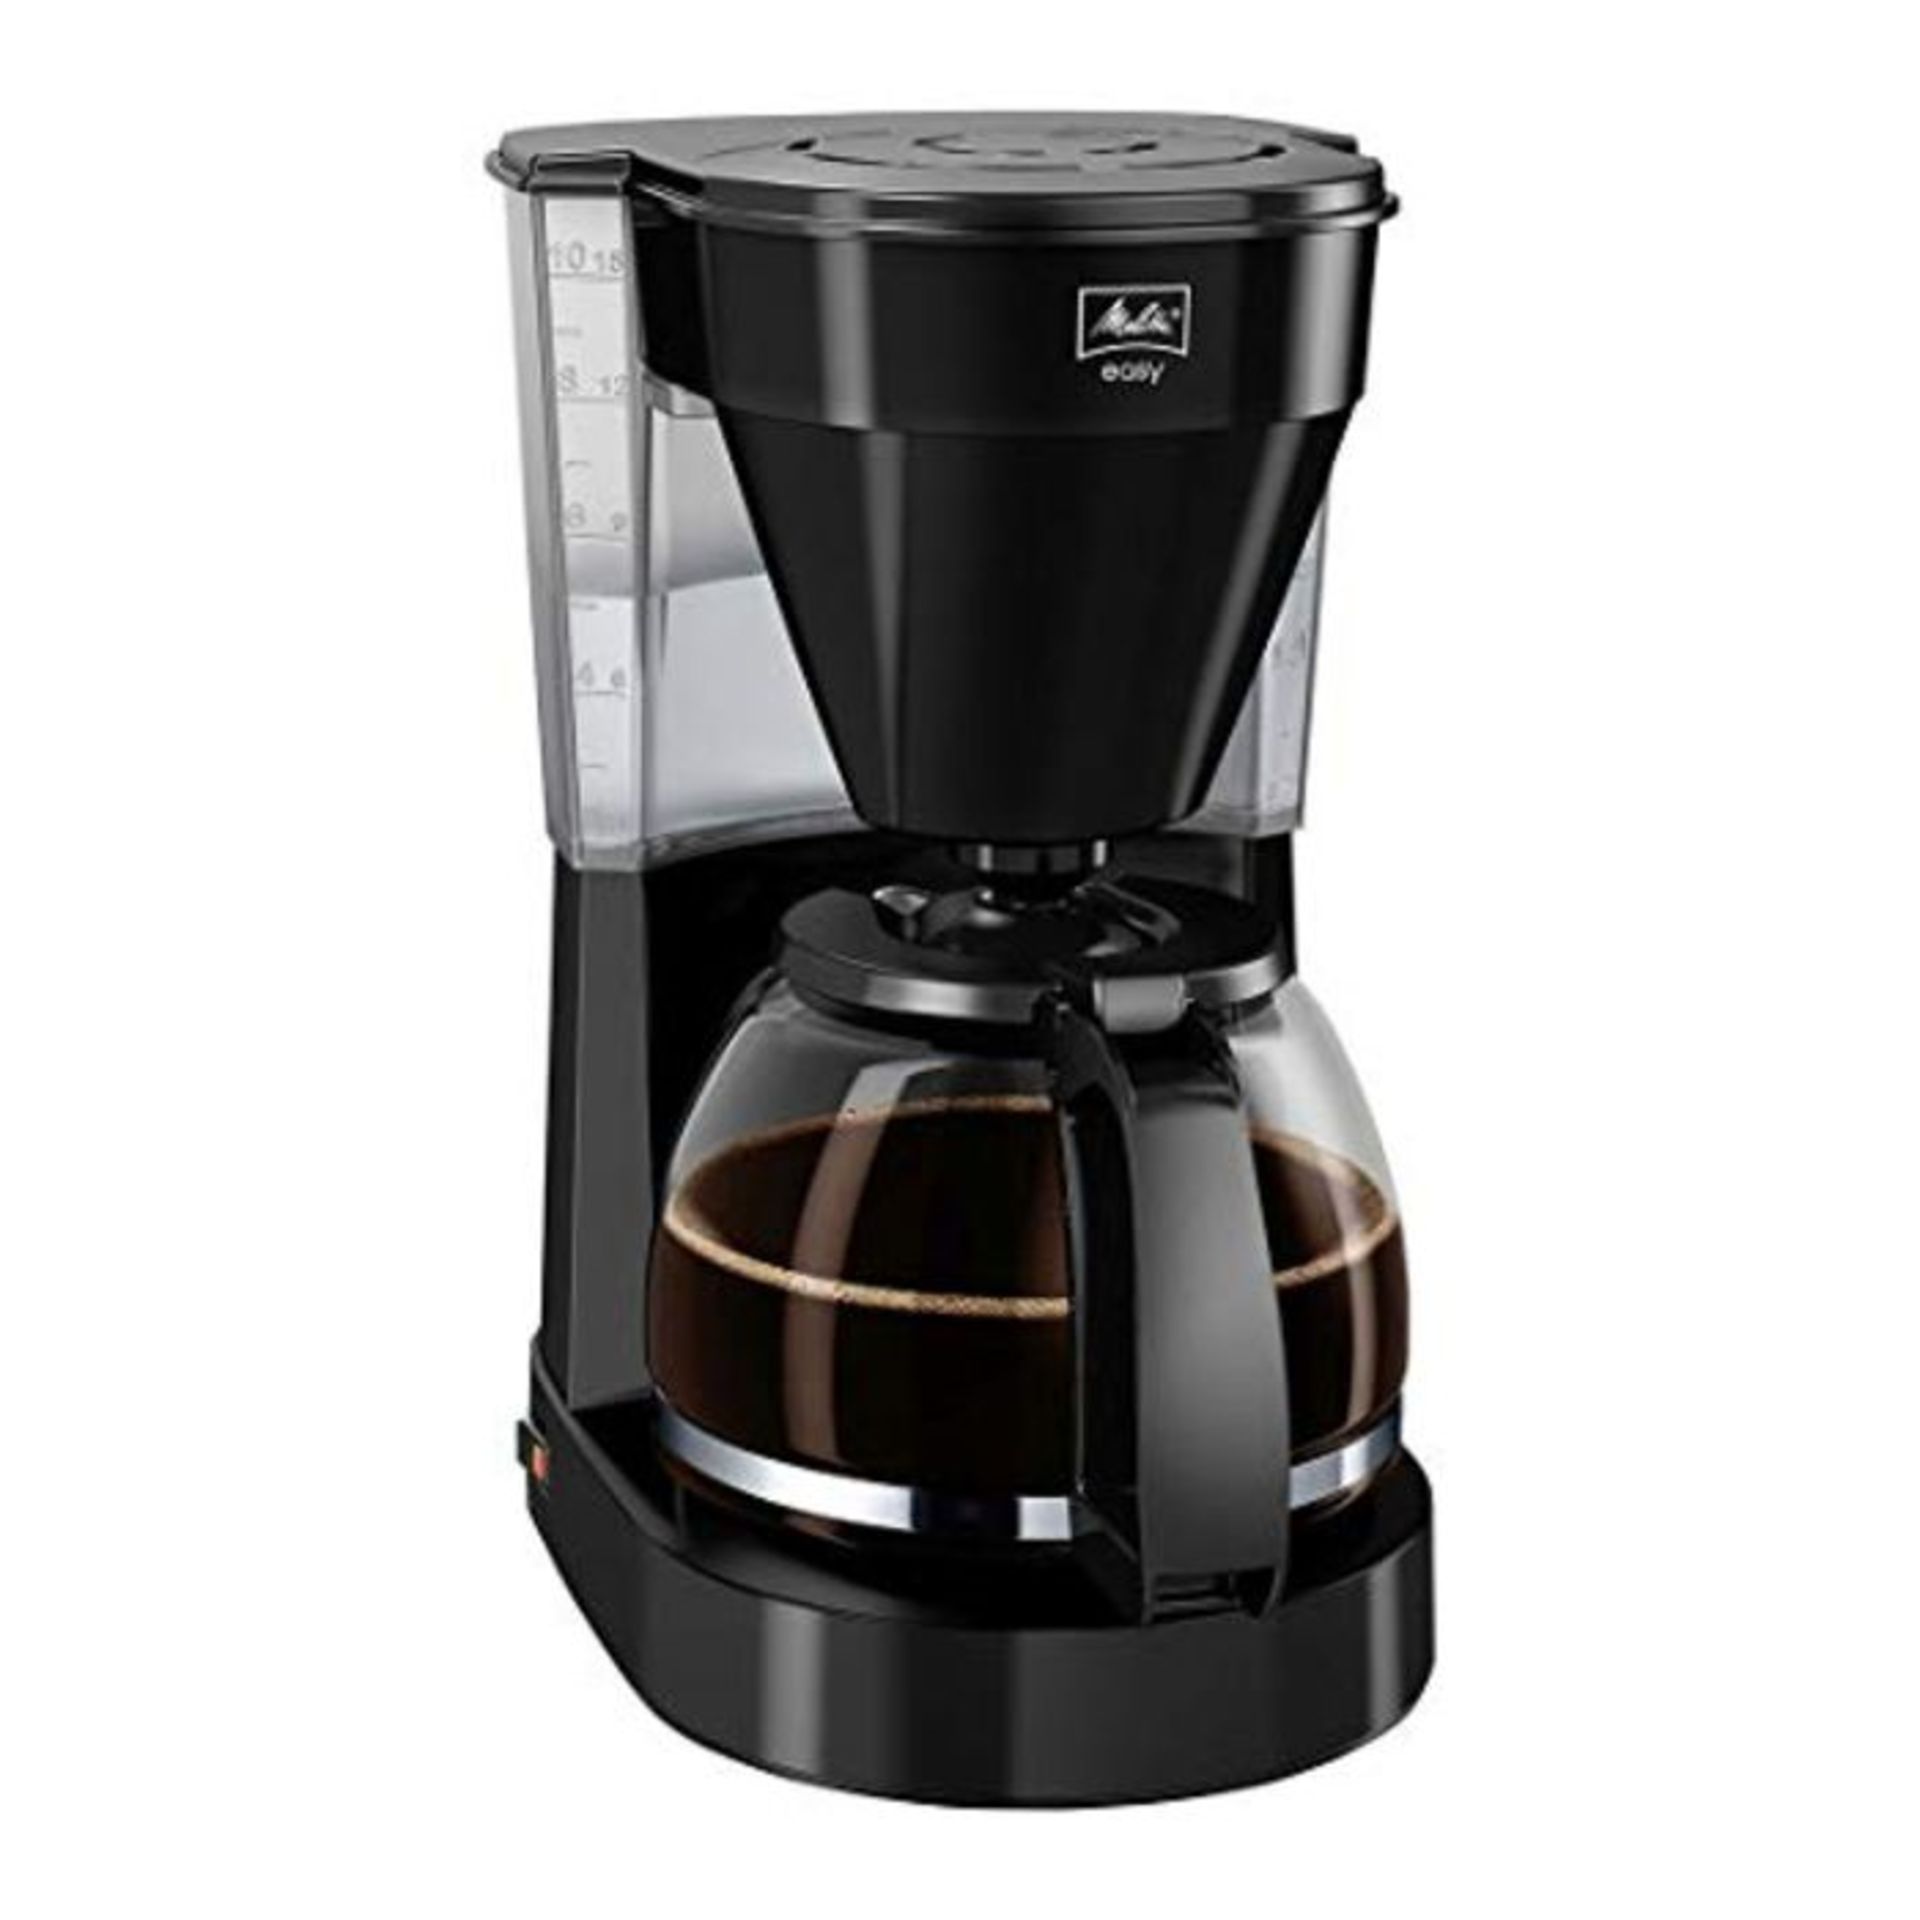 Melitta Filter Coffee Machine with Glass Jug, Easy II Model, 1023-02, Black, 6762887